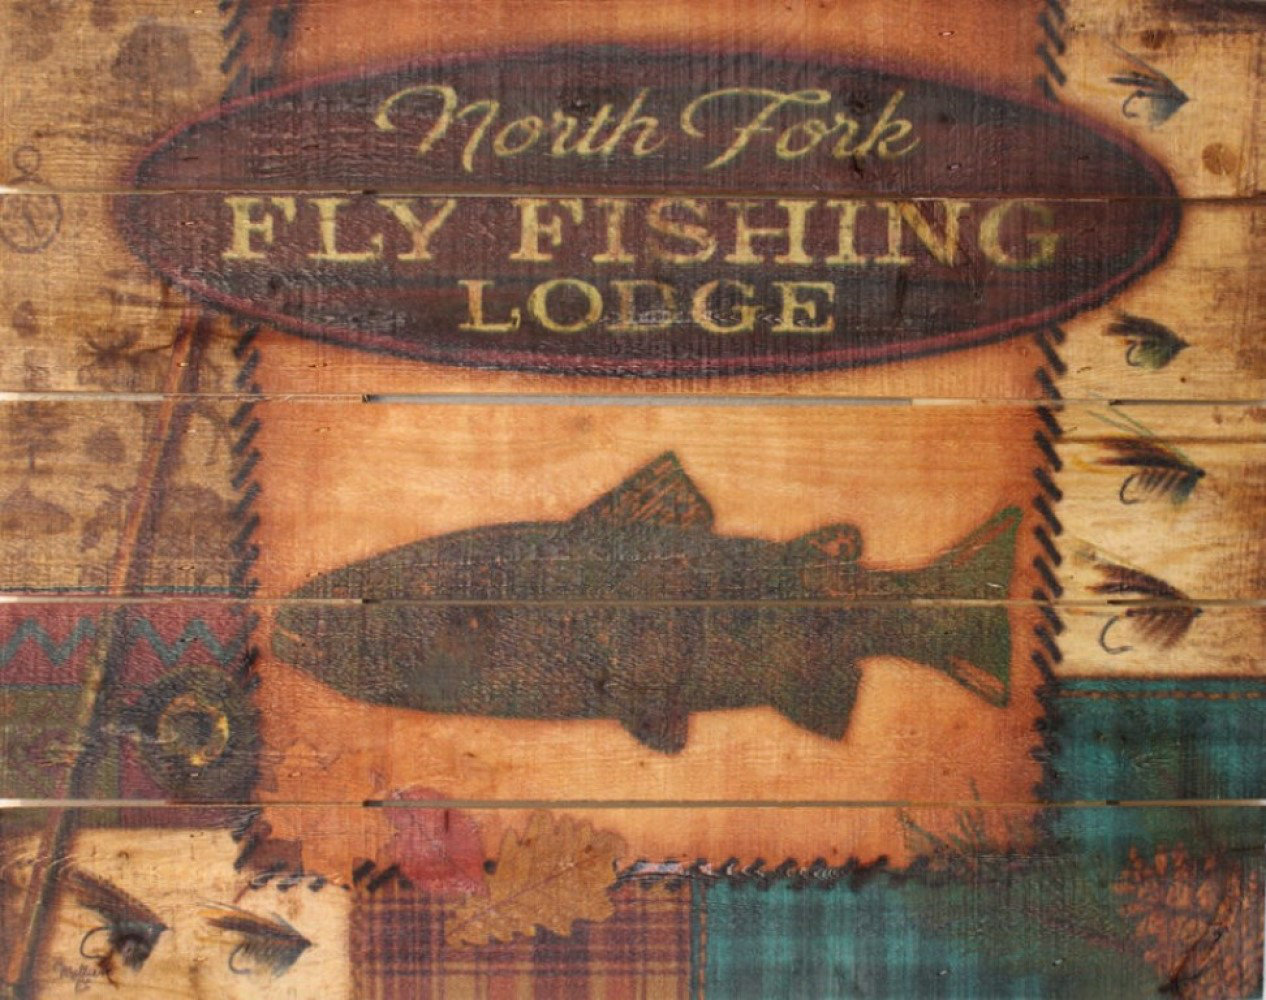 Buyenlarge J. Dukehart And Co. Fine Fishing Tackle Print